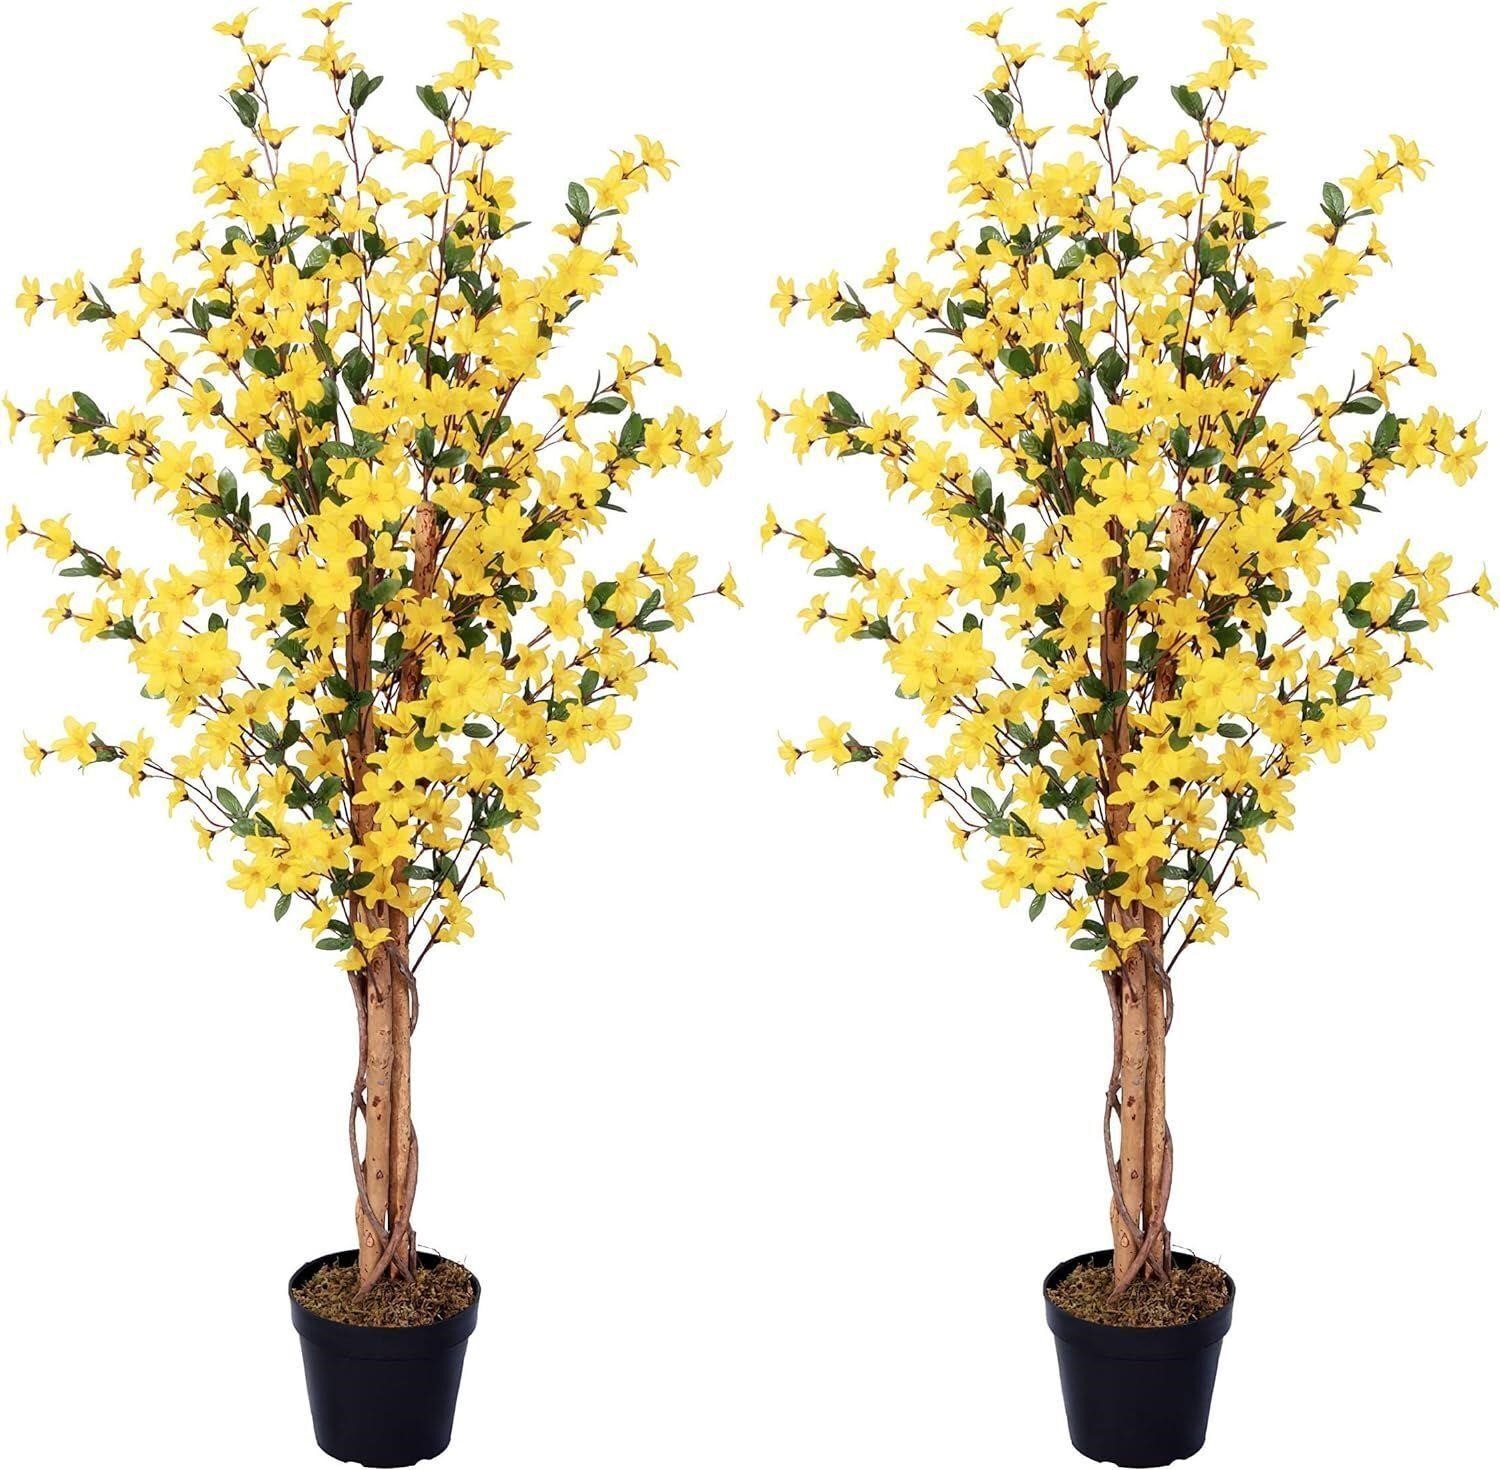 AMERIQUE Artificial Bright Yellow Forsythia Plants